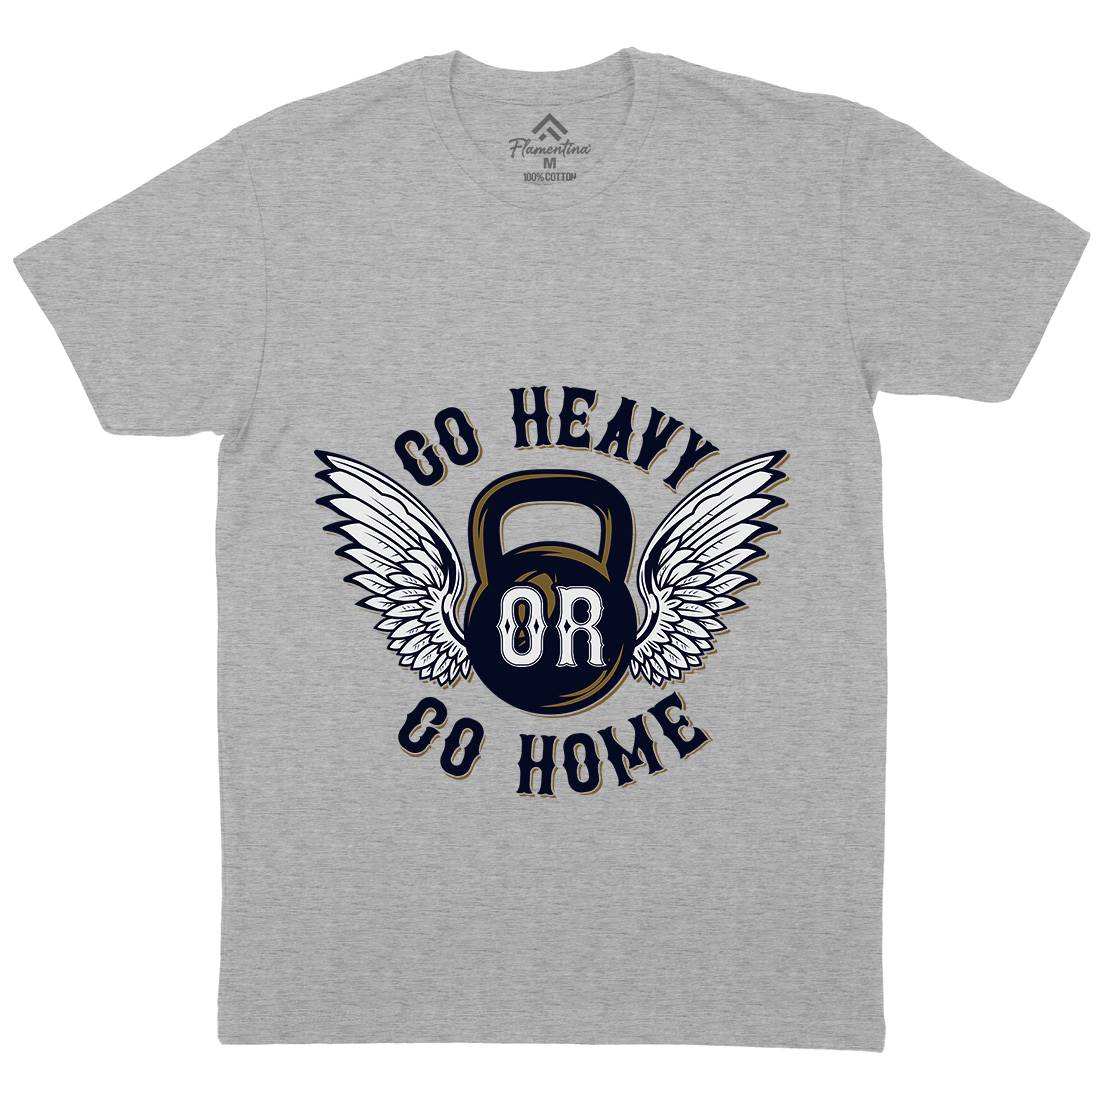 Heavy Mens Crew Neck T-Shirt Gym B303